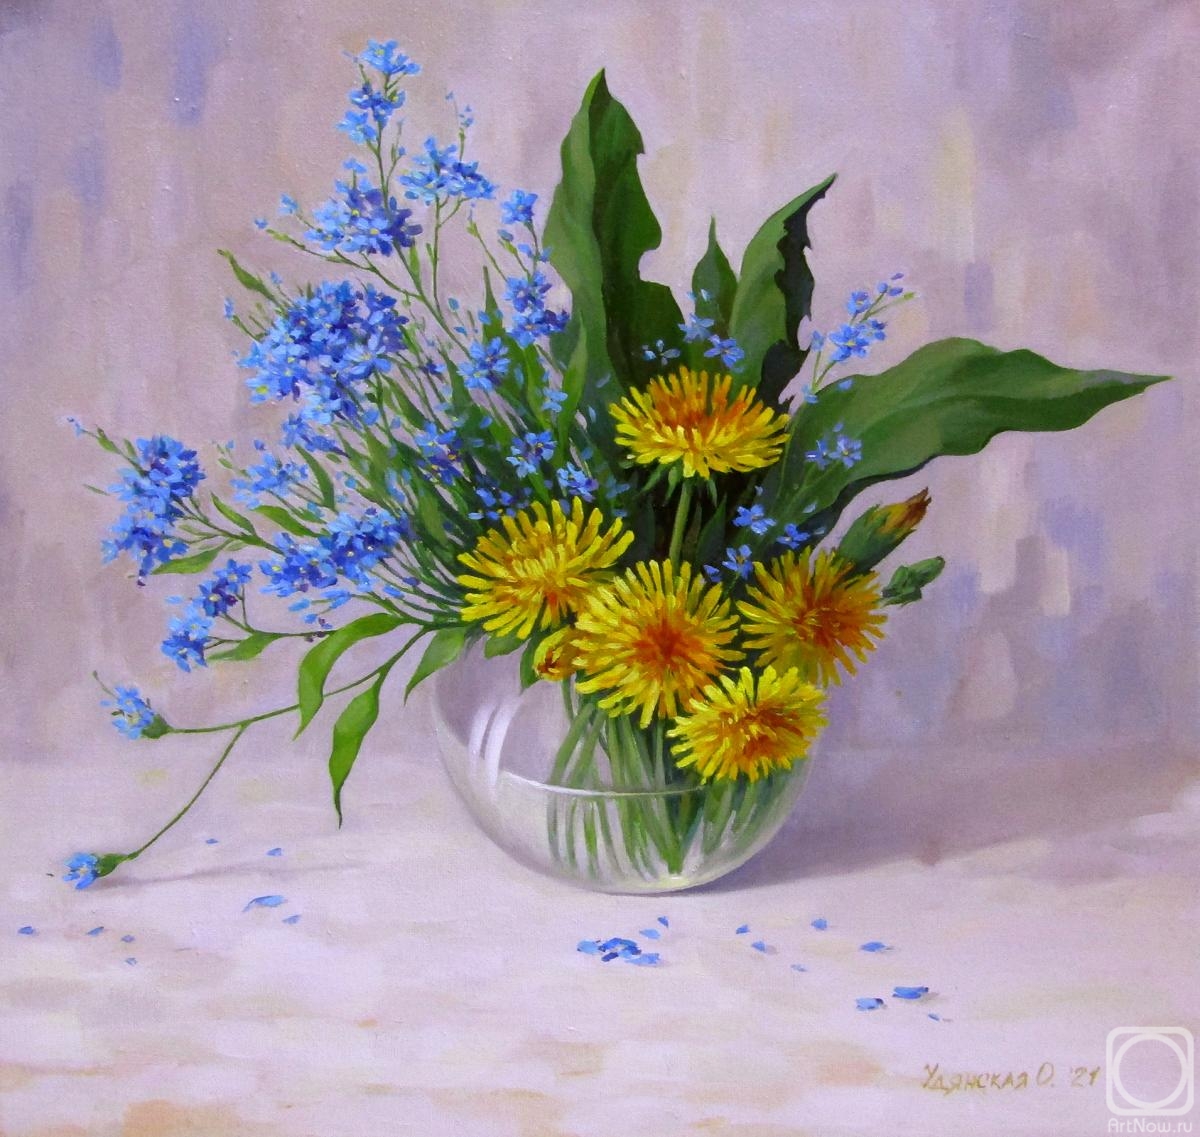 Udyanskaya Olga. Sunny bouquet